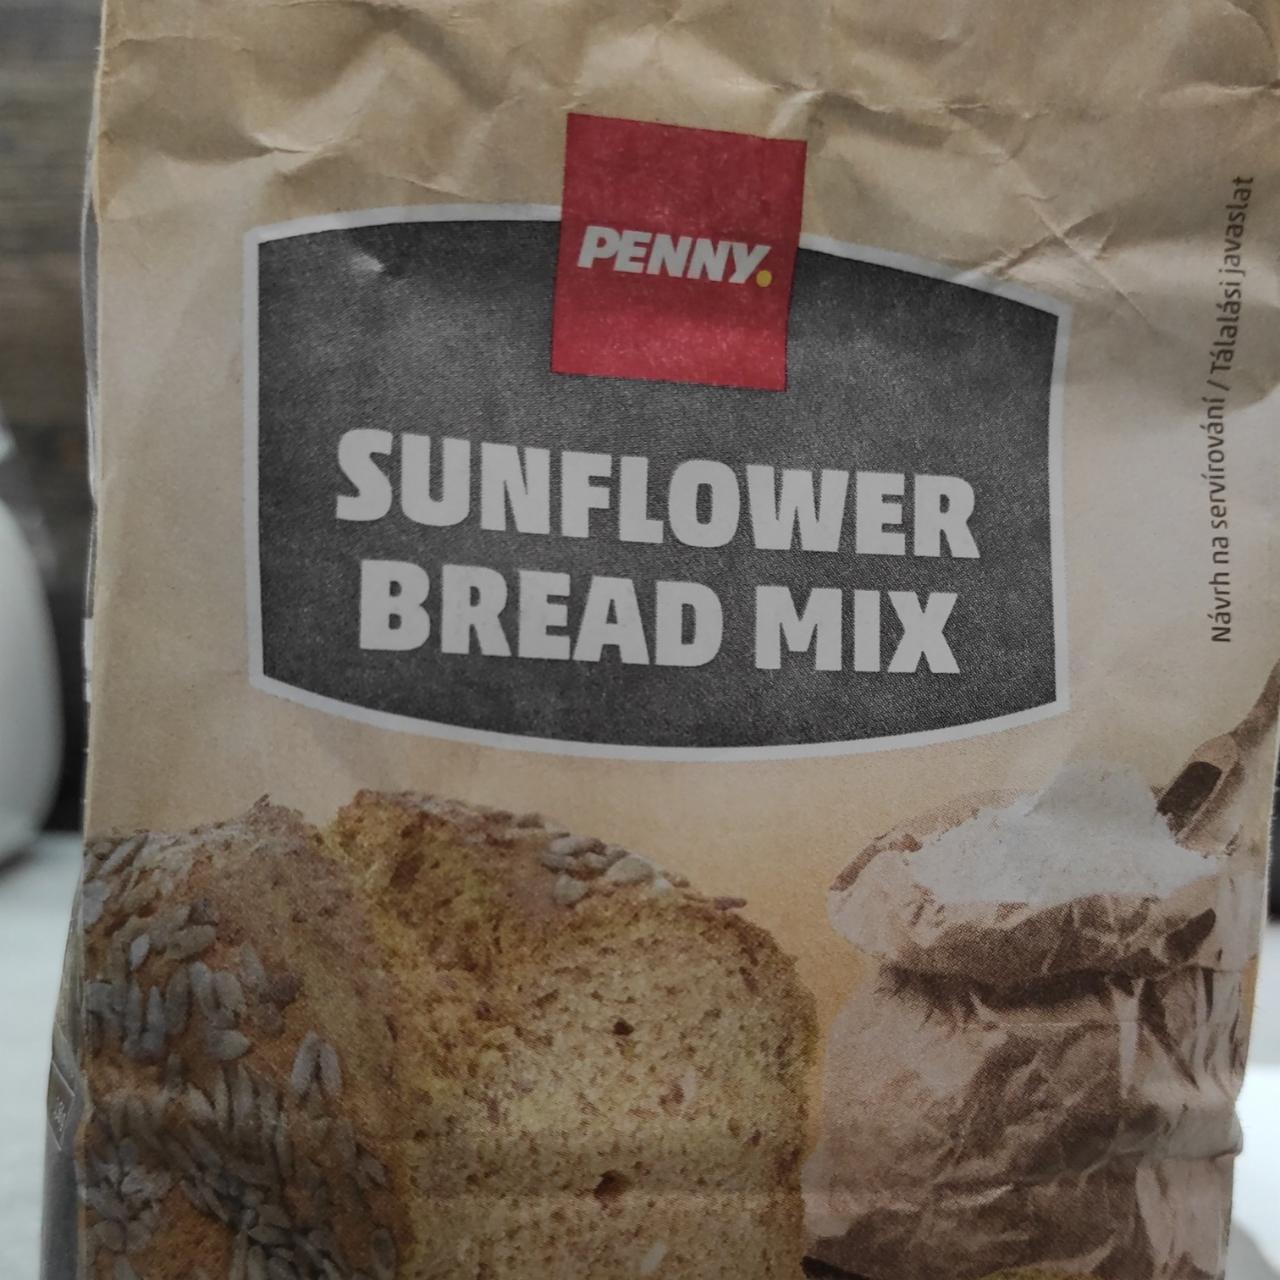 Képek - Sunflower Bread Mix Penny